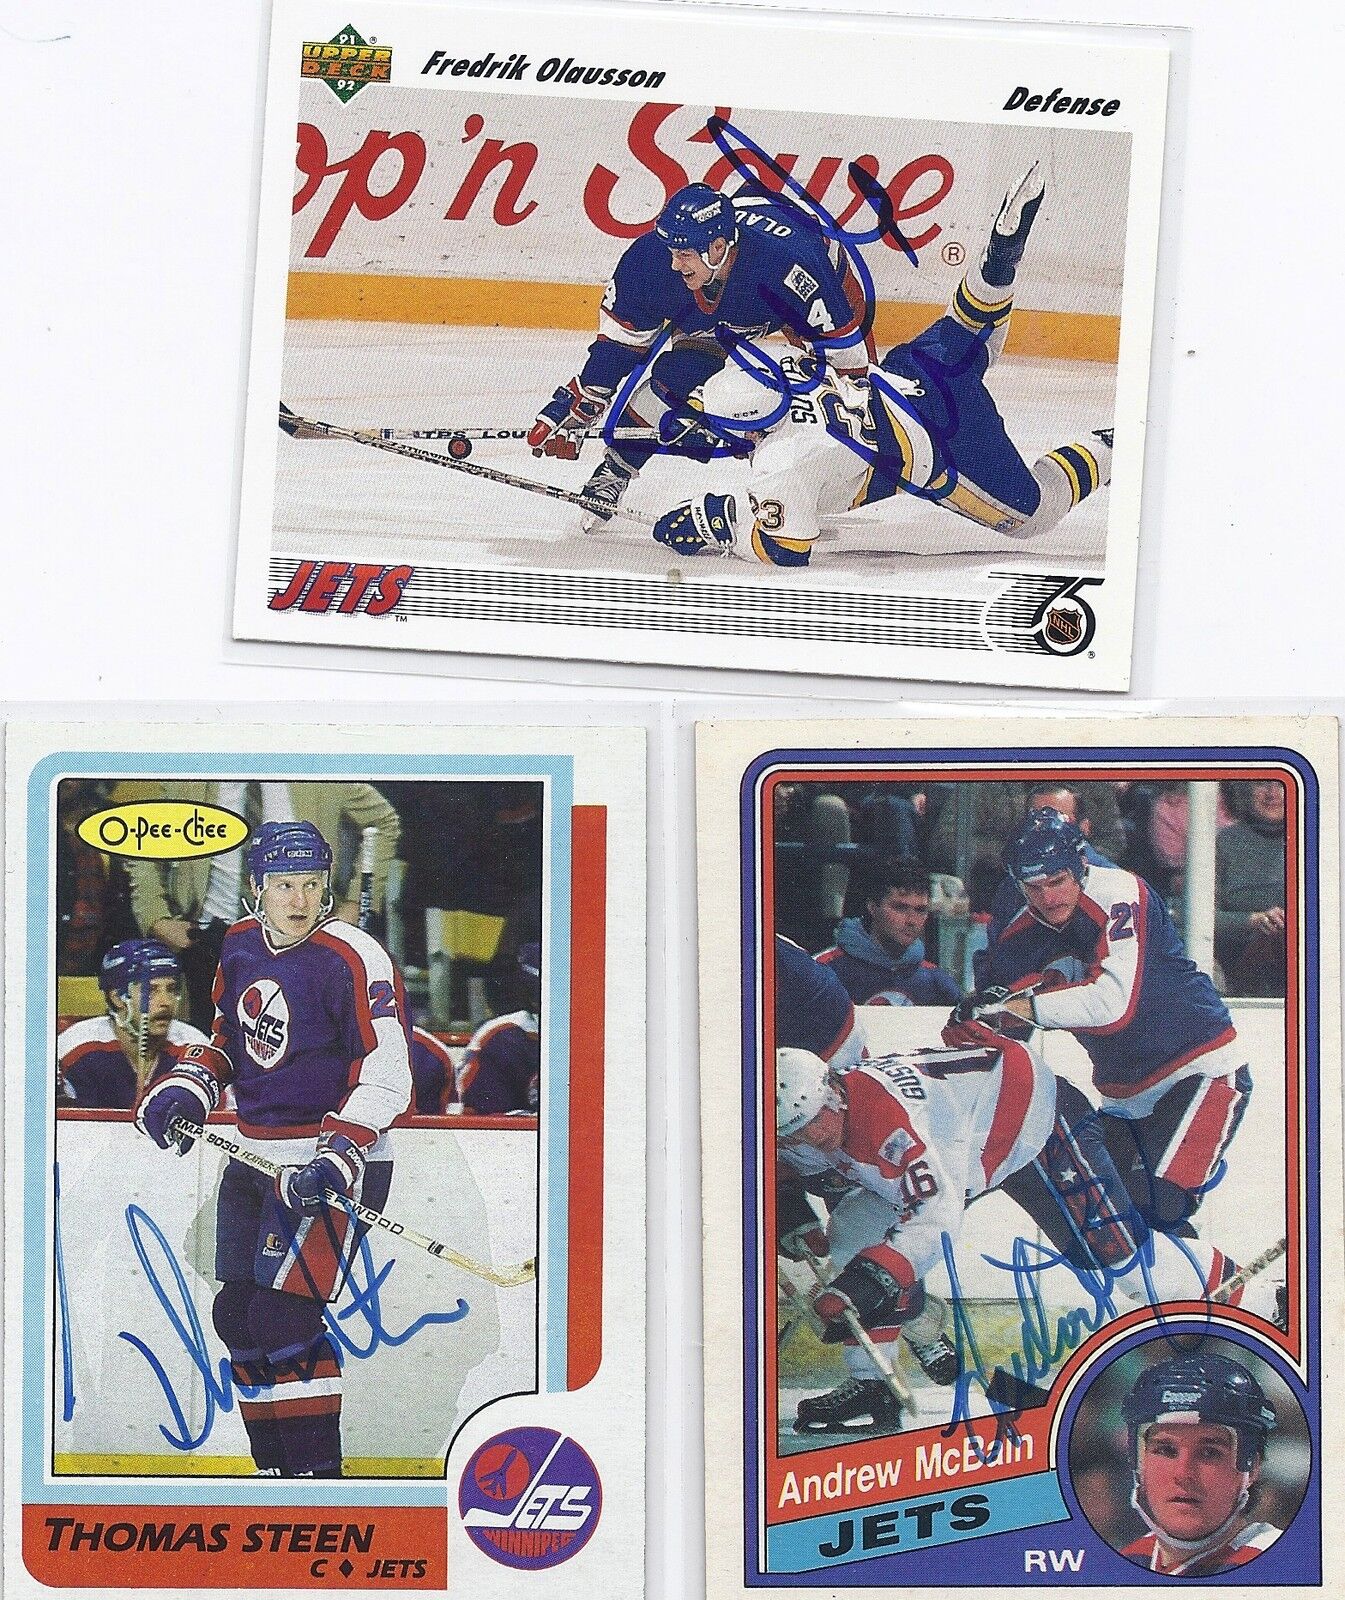 1991 UD # 383 Fredrik Olausson Winnipeg Jets Autographed Signed Hockey Card